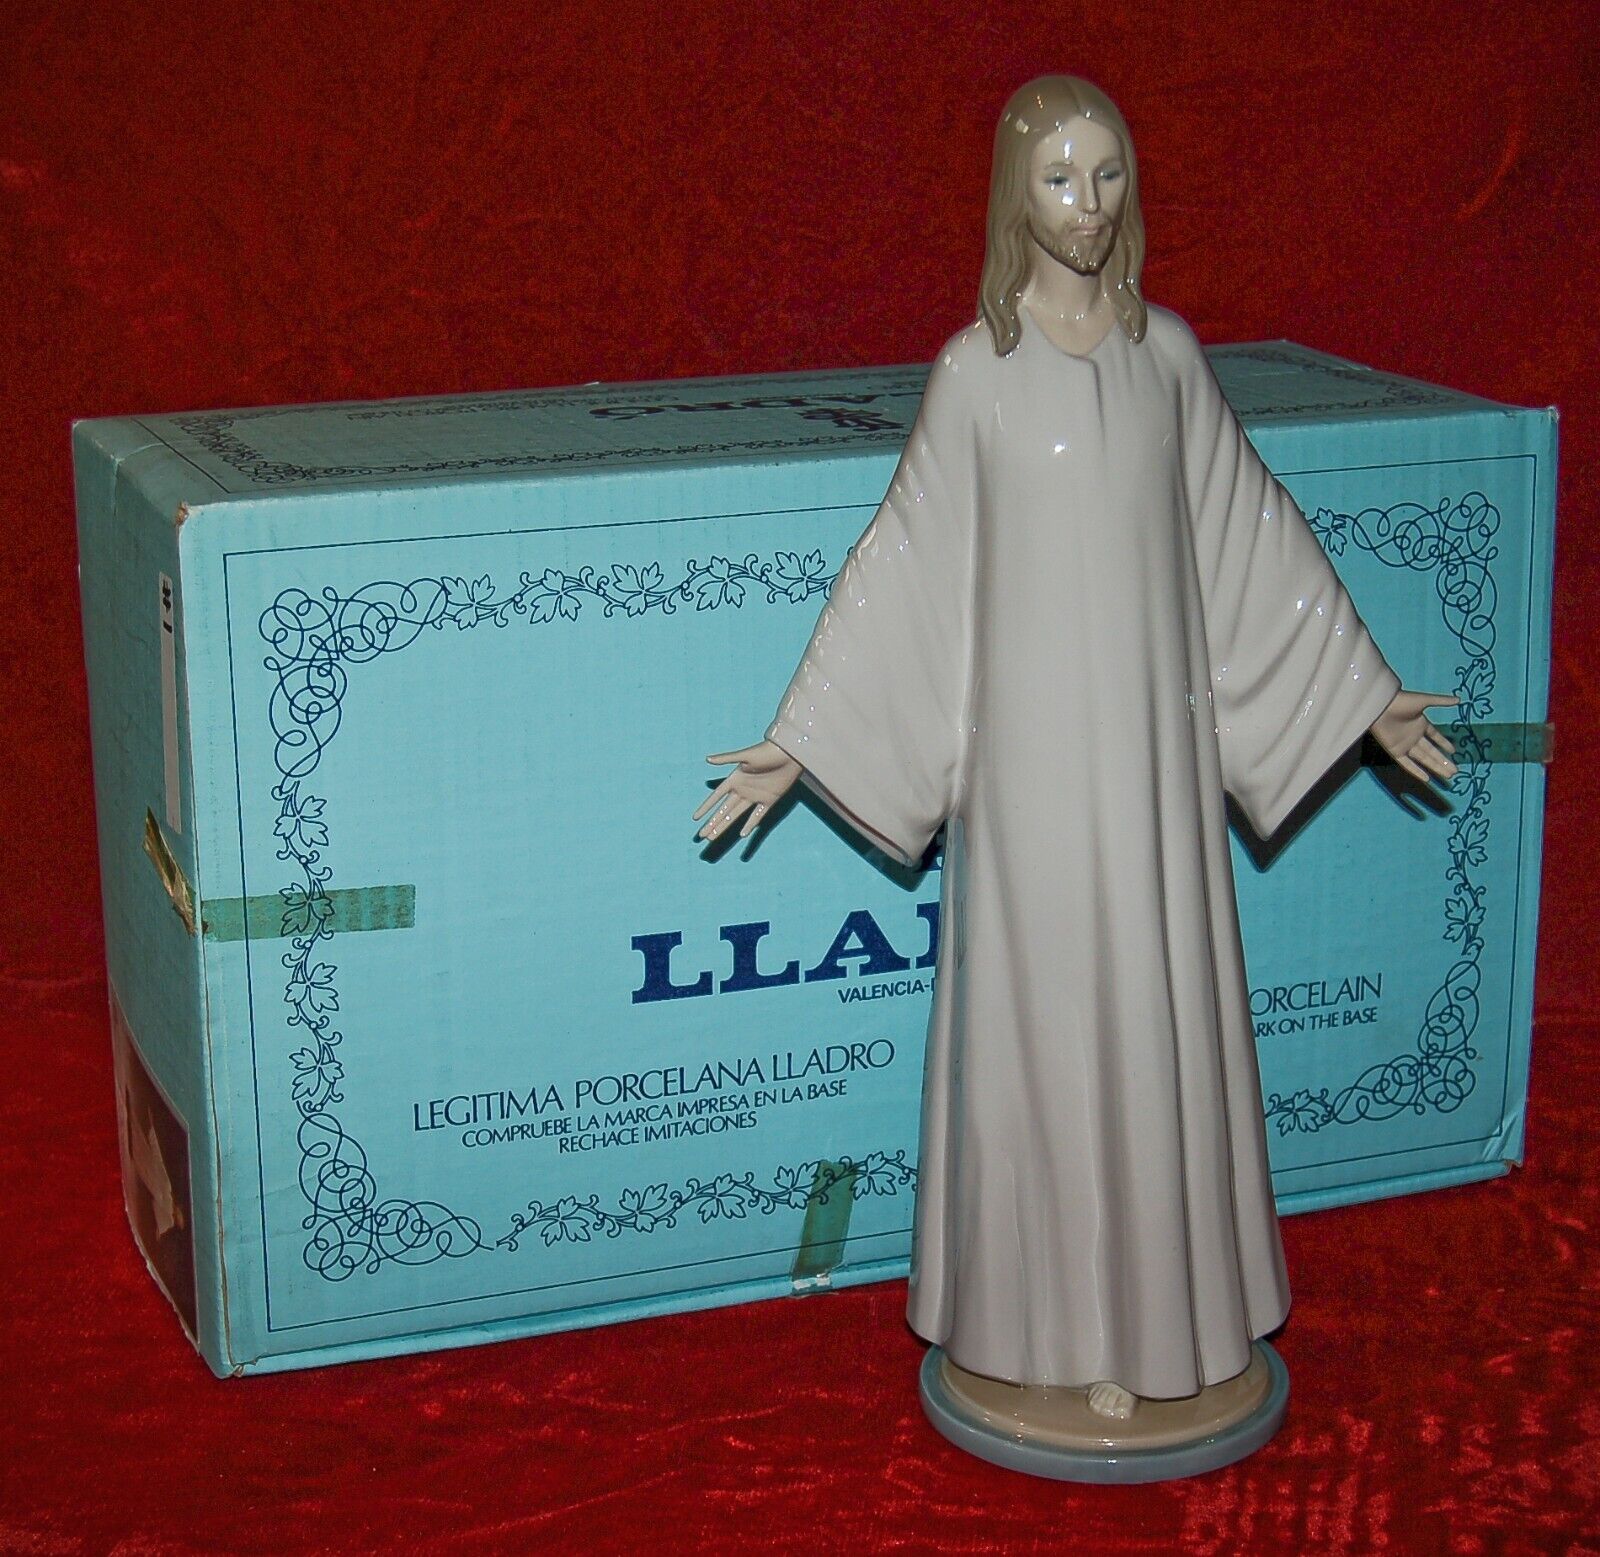 LLADRO Porcelain JESUS #5167 In Original Box 1980's Made in Spain